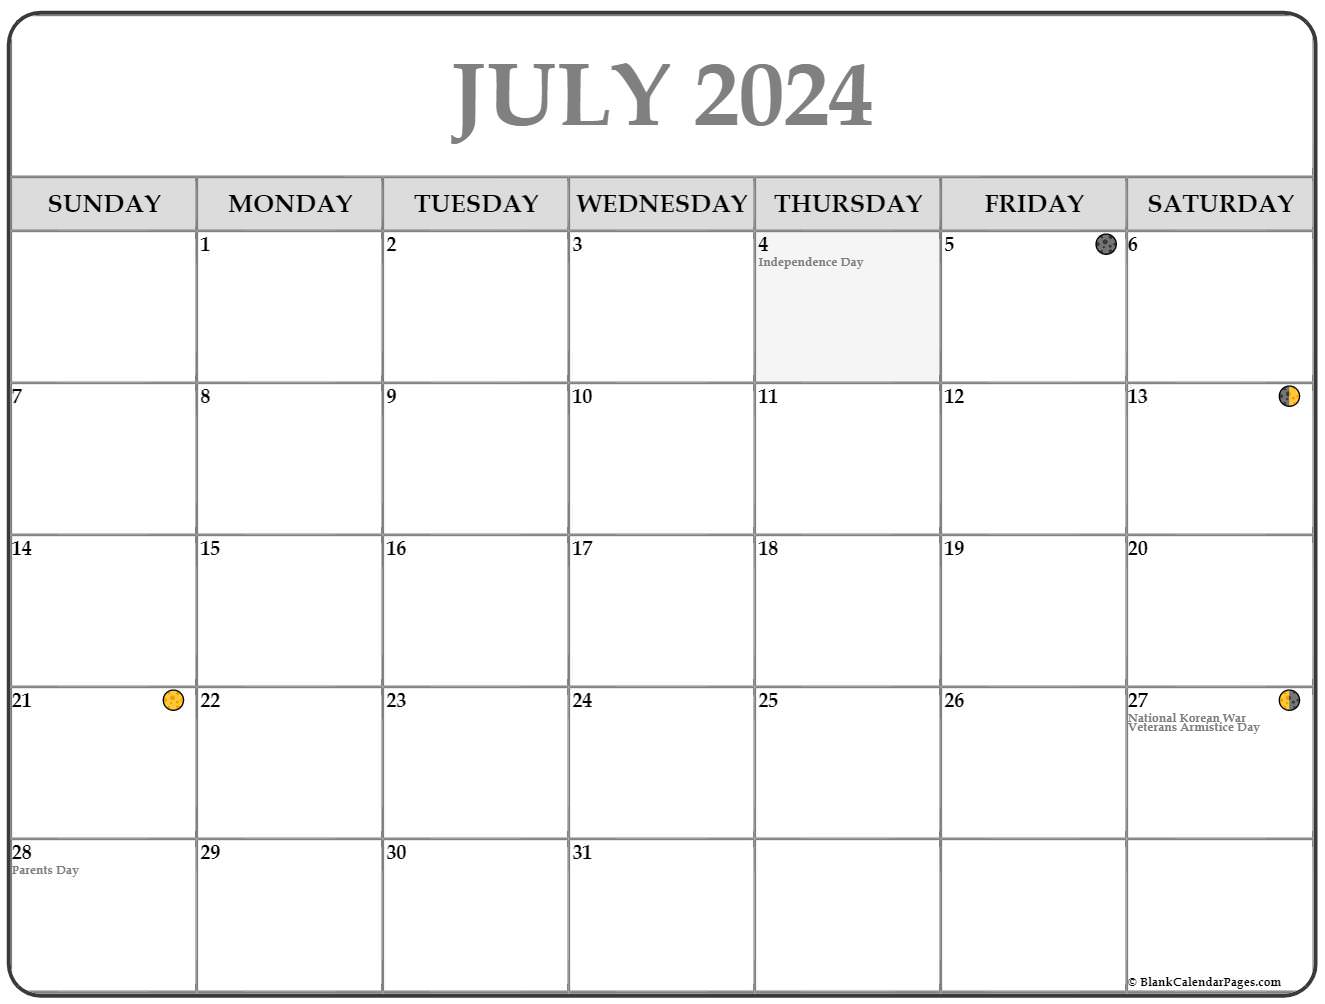 July 2024 Calendar Moon1 